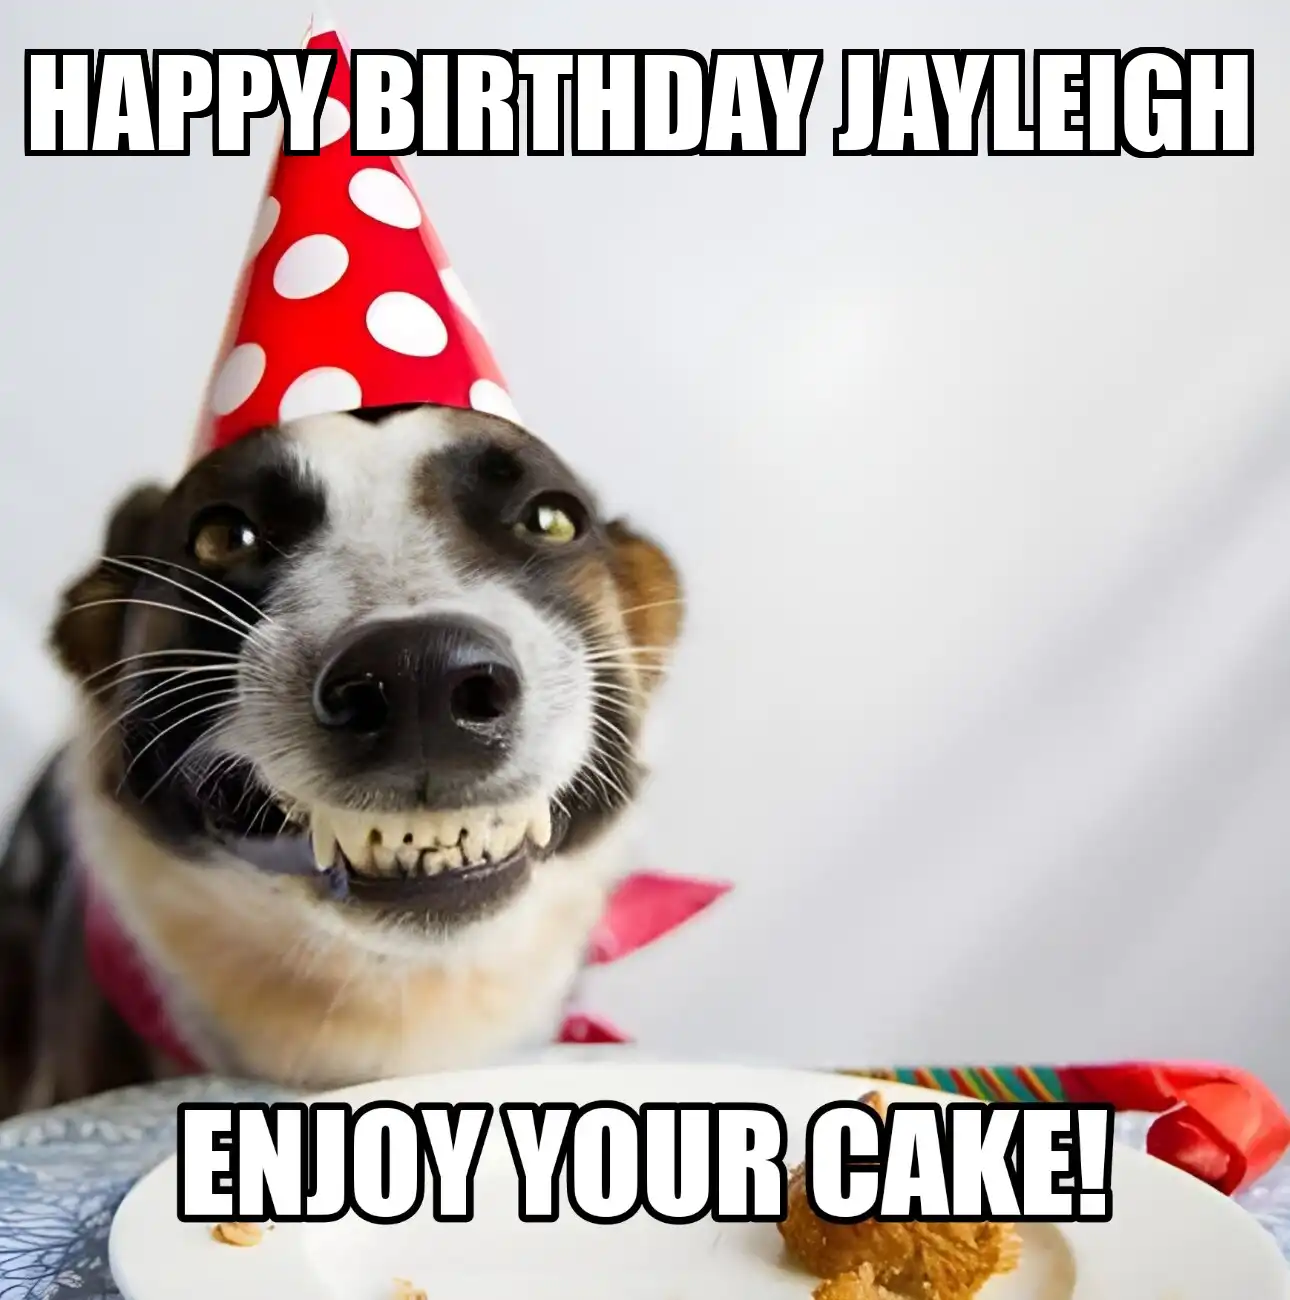 Happy Birthday Jayleigh Enjoy Your Cake Dog Meme